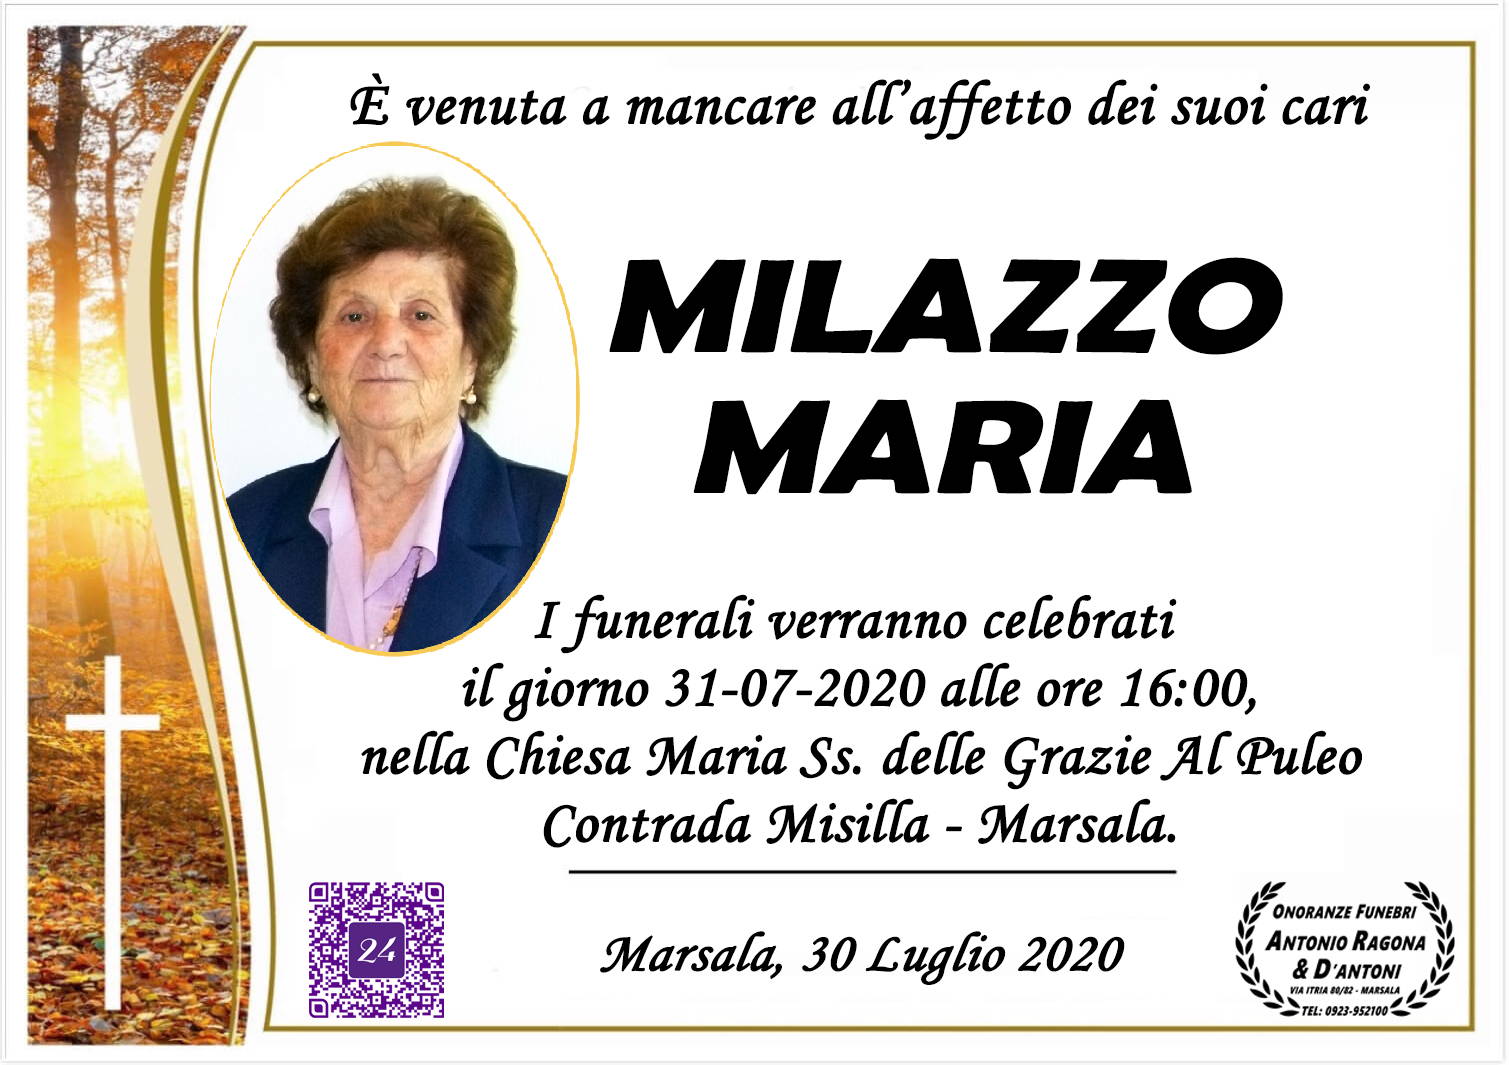 Maria Milazzo